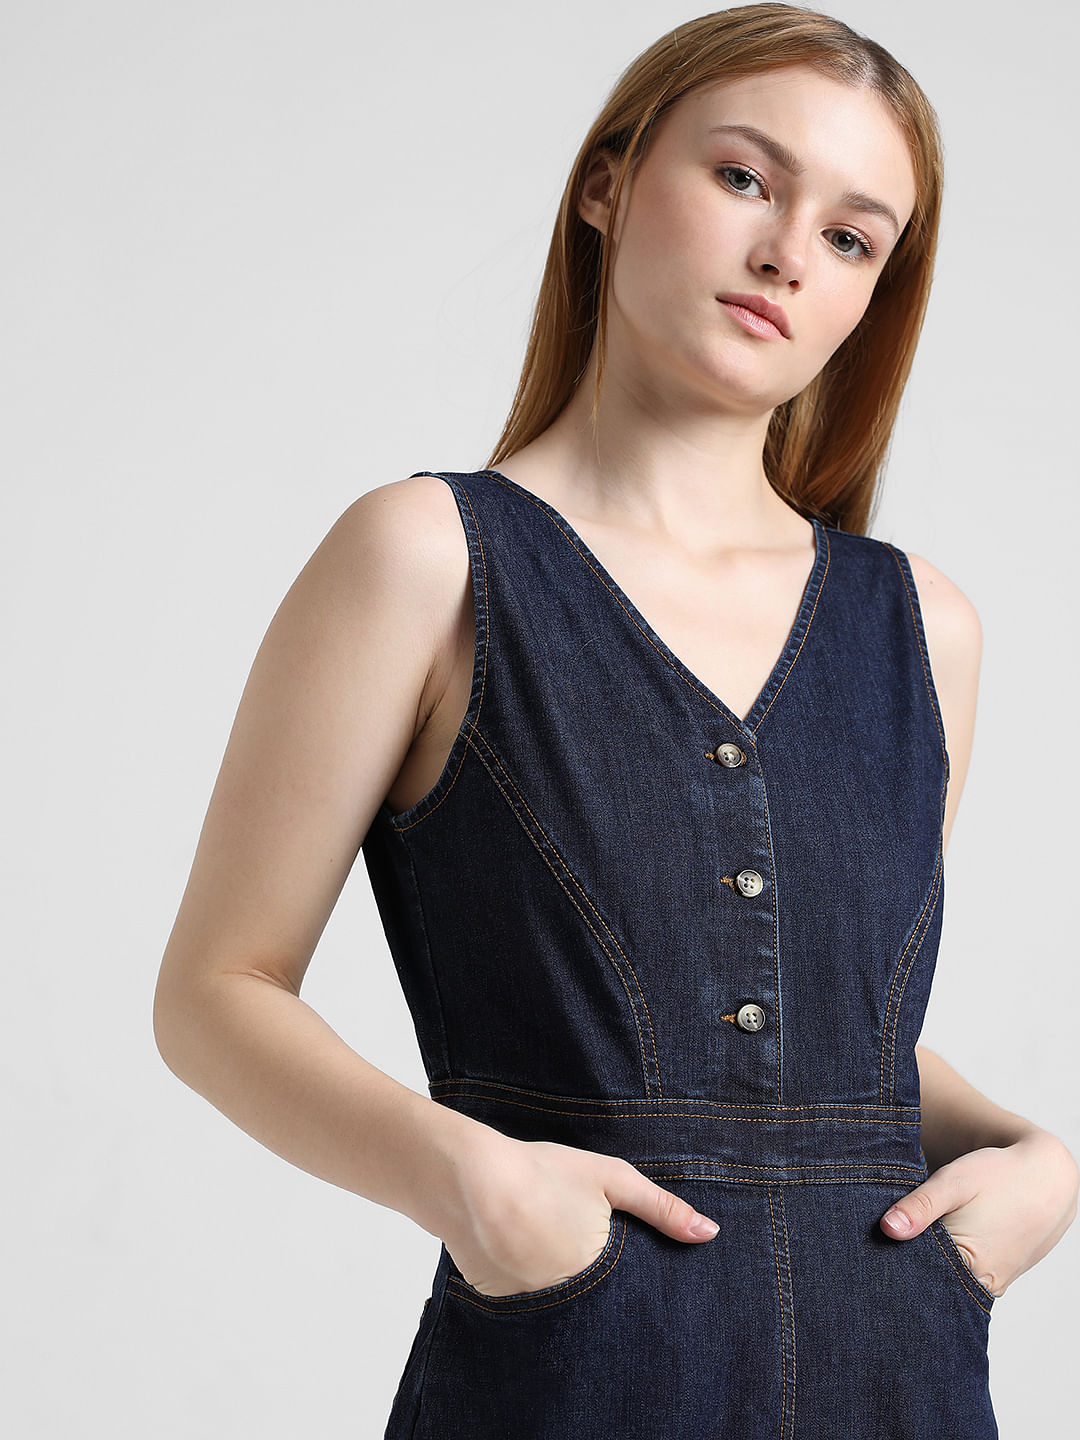 Agnes Orinda + Agnes Orinda Plus Size Overalls Jeans Dresses for Women  Adjustable Strap Back Slit Raw Hem Overall Denim Dress